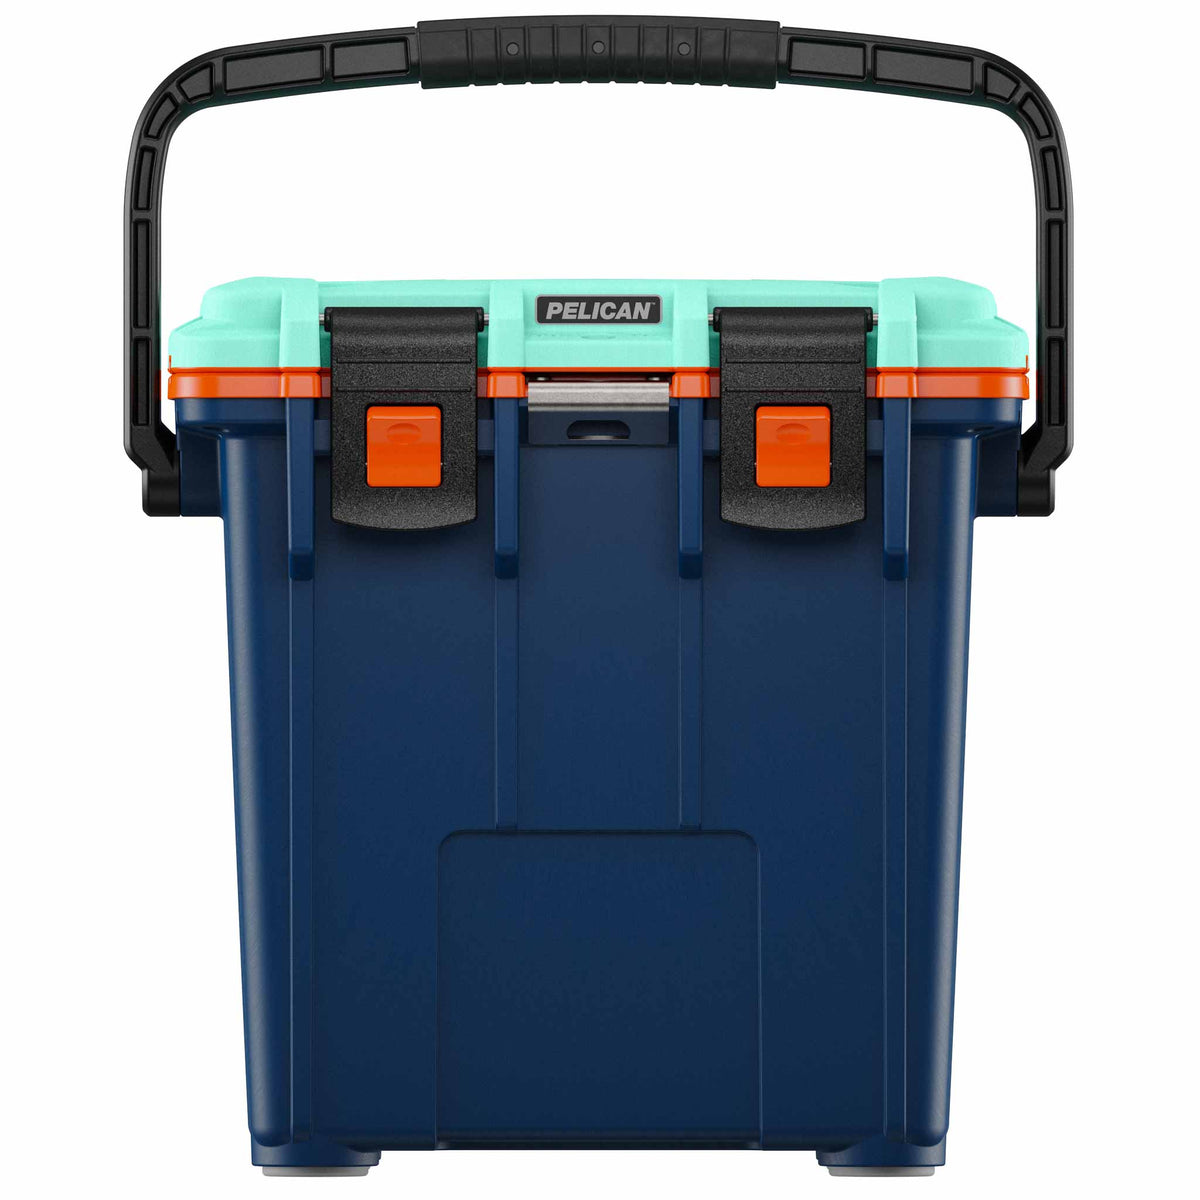 Refurbished Pelican™ 20QT Elite Cooler Cooler in Pacific Blue/Orange/Seafoam